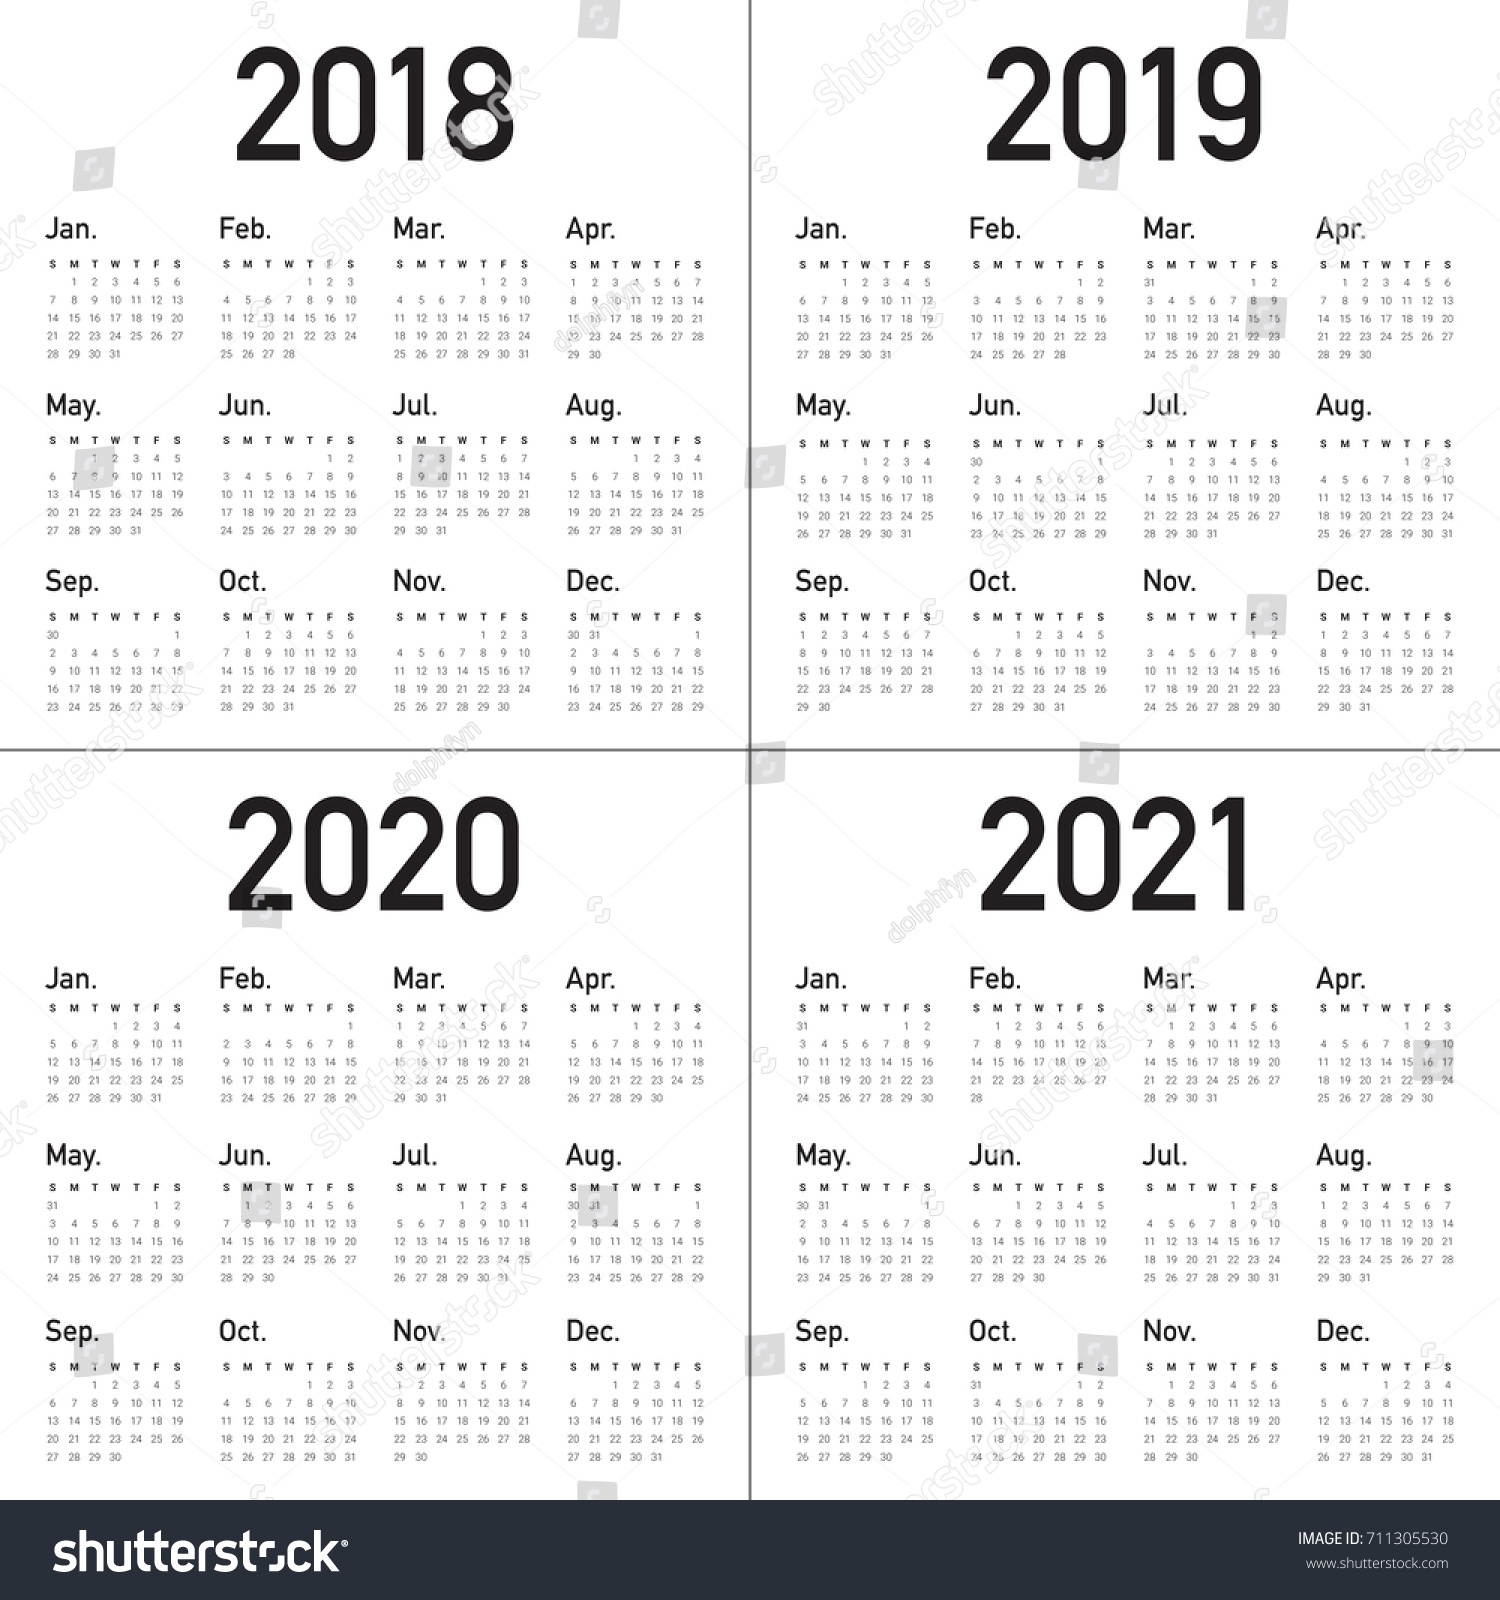 Printable 3 Year Calendar 2019 To 2021 | Printable Calendar 2019 within 3 Year Calendar Printable 2018 2019 2020